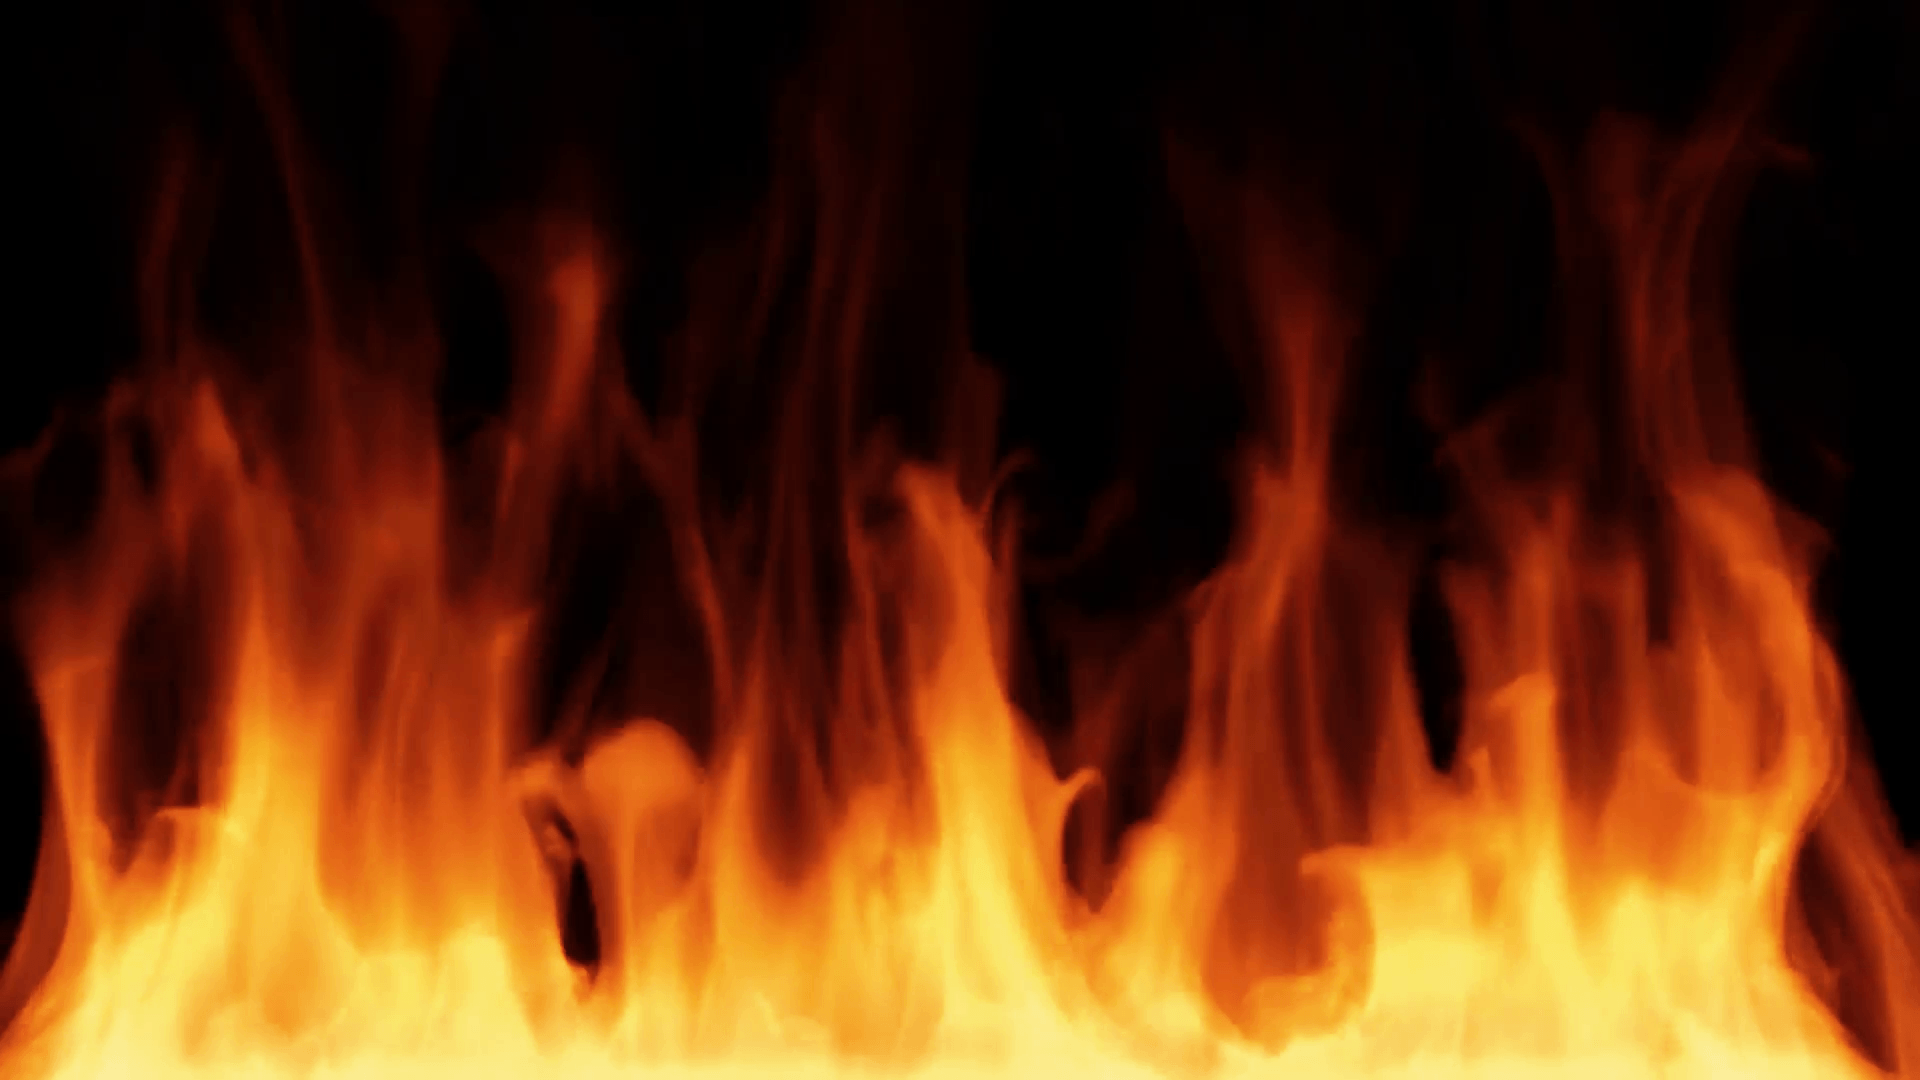 flames black background